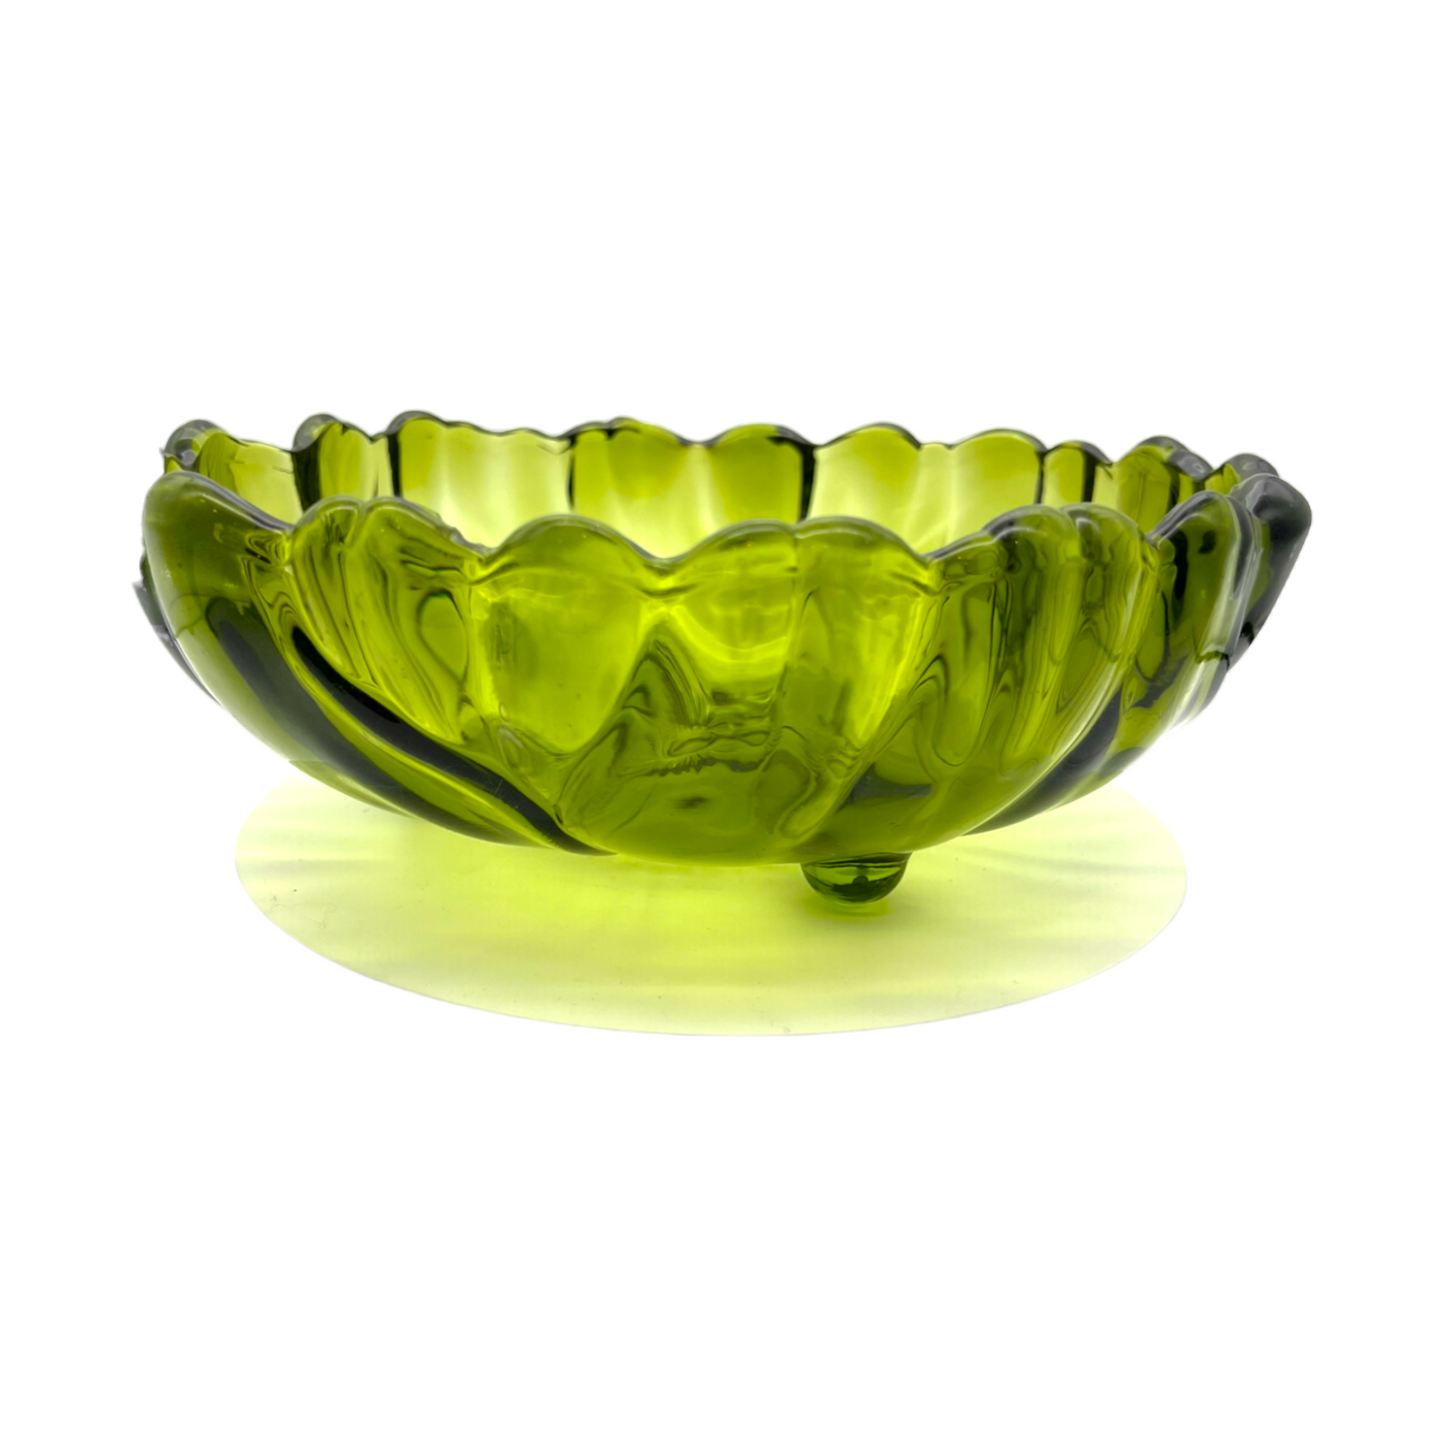 Indiana Glass- Green Fruit Bowl - Vintage - Large - 10.25"